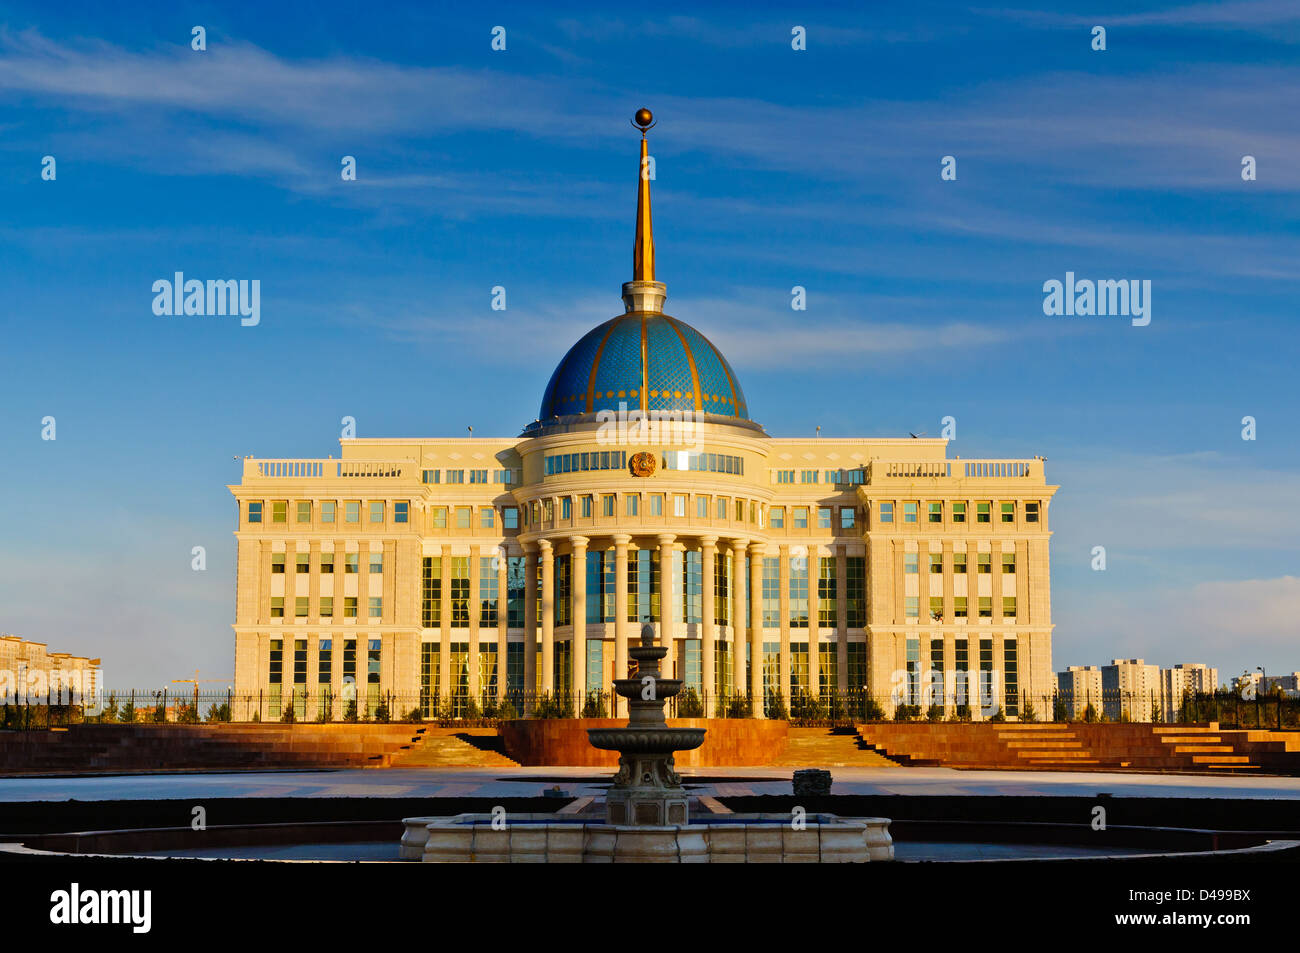 Ak Orda presidential palace in Astana, Kazakhstan Stock Photo